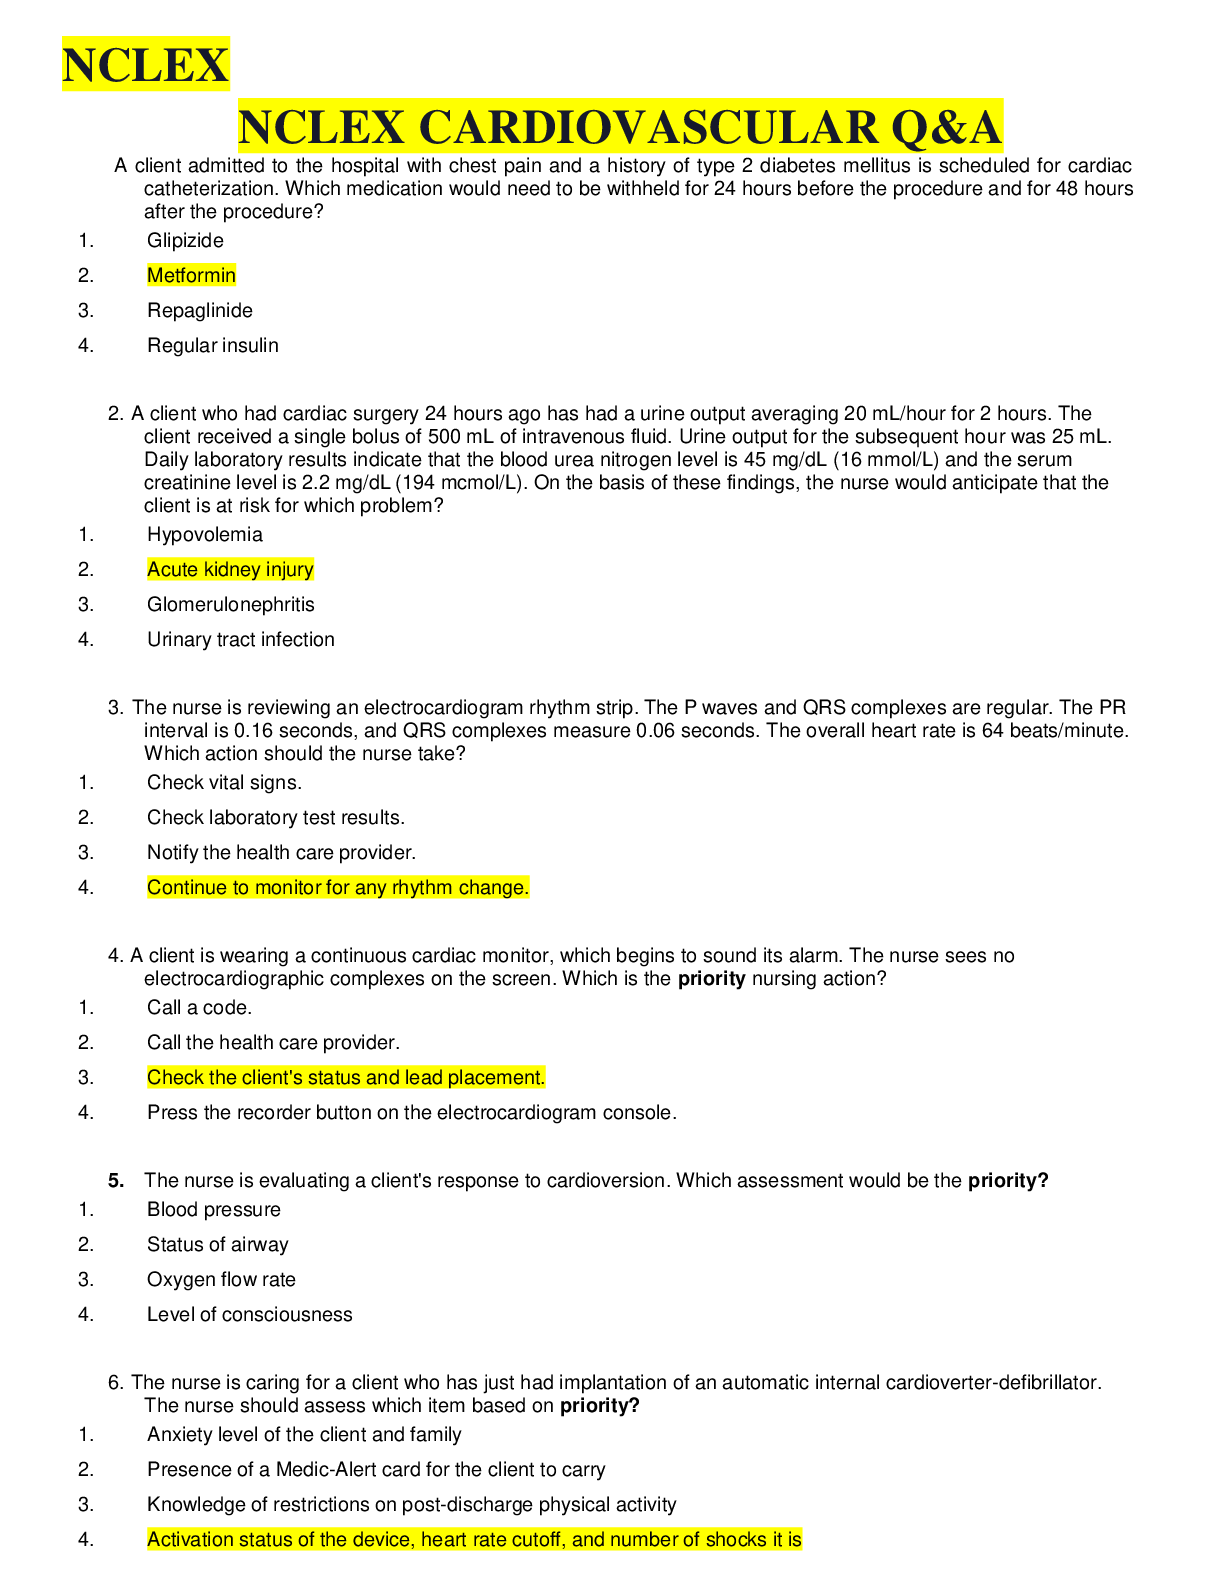 NCLEX CARDIOVASCULAR LATEST QUESTIONS & ANSWERS, Already graded A (2021